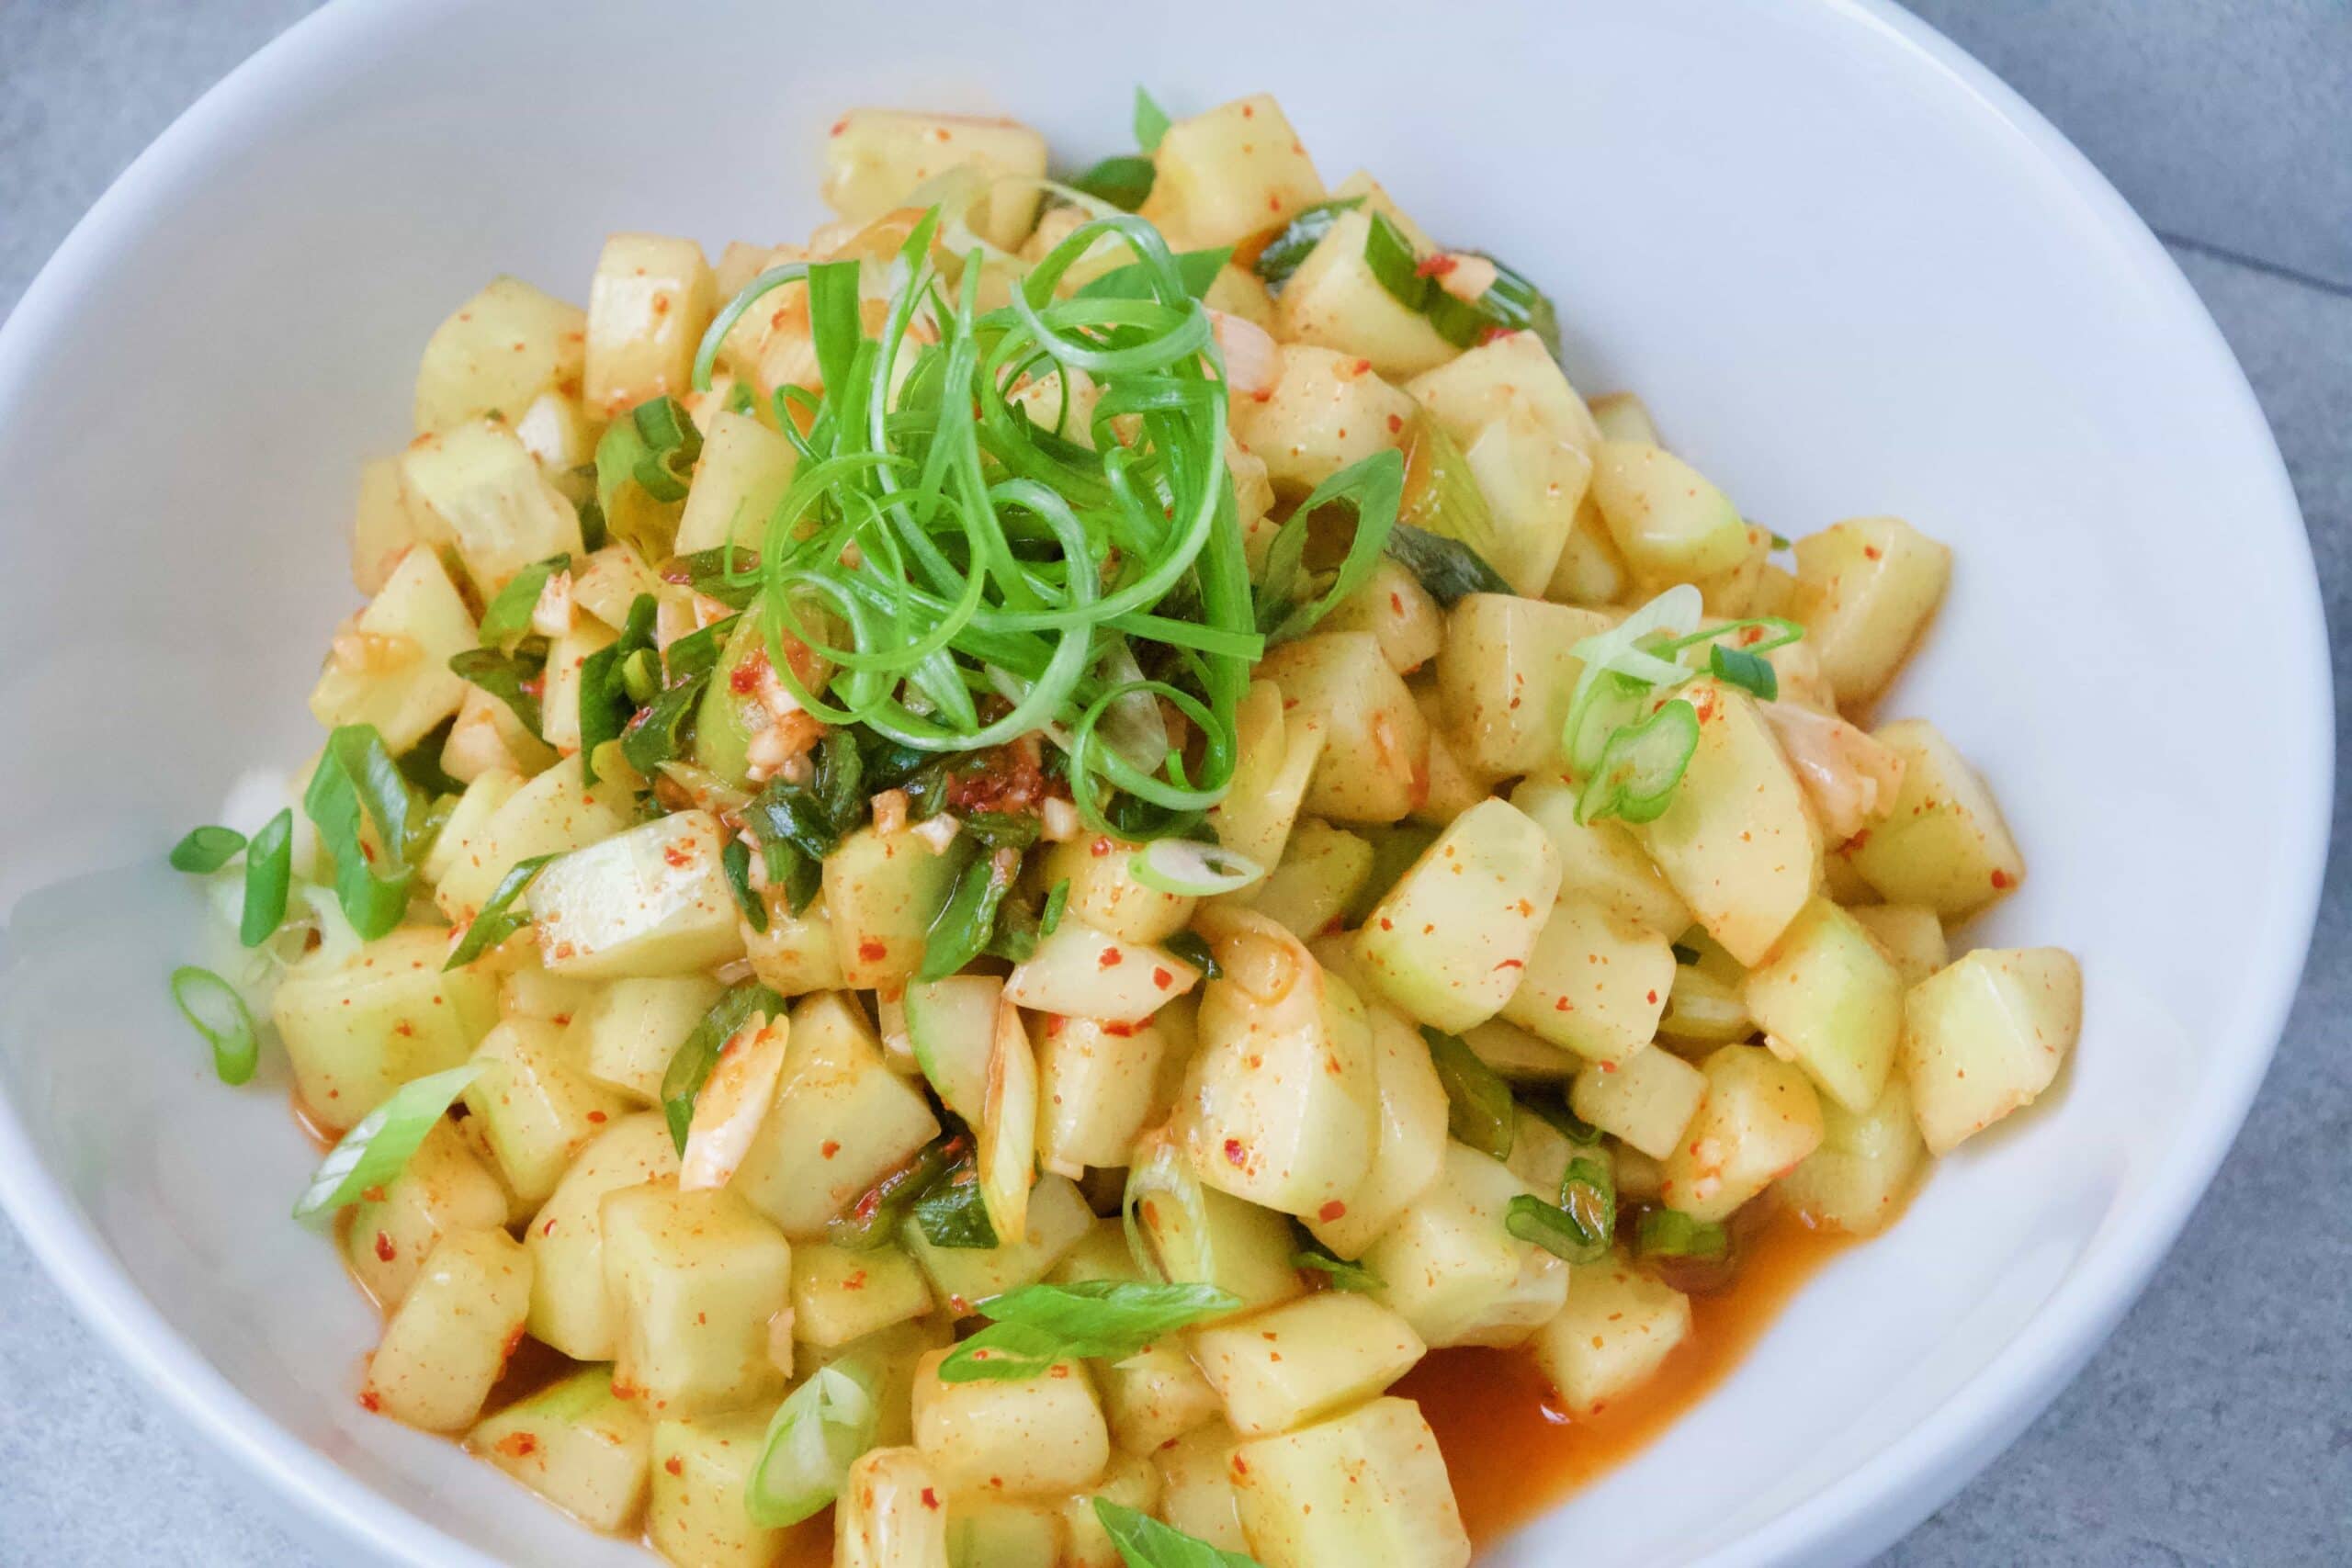 Cucumber Kimchi Salad from Joanna Gaines Magnolia Table Cookbook